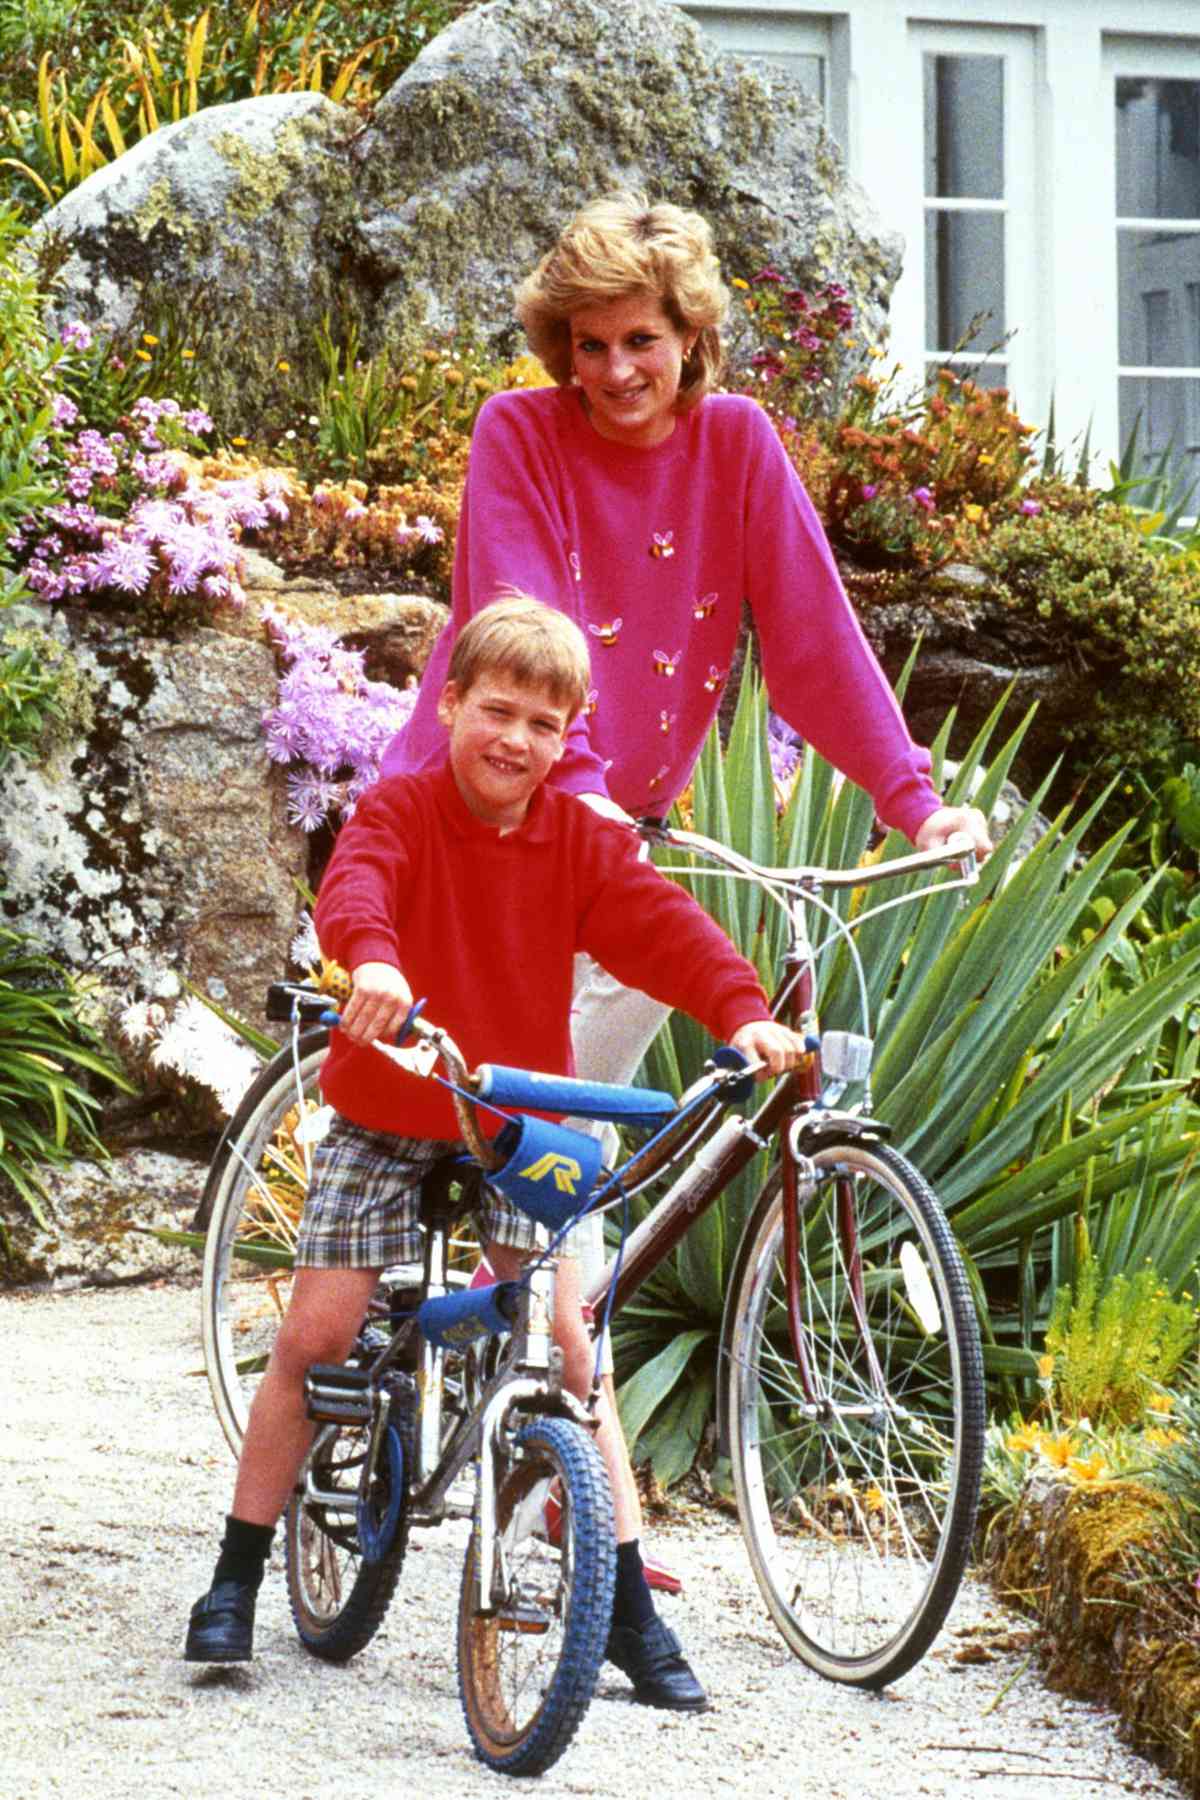 Princess Diana Prince William - Embed